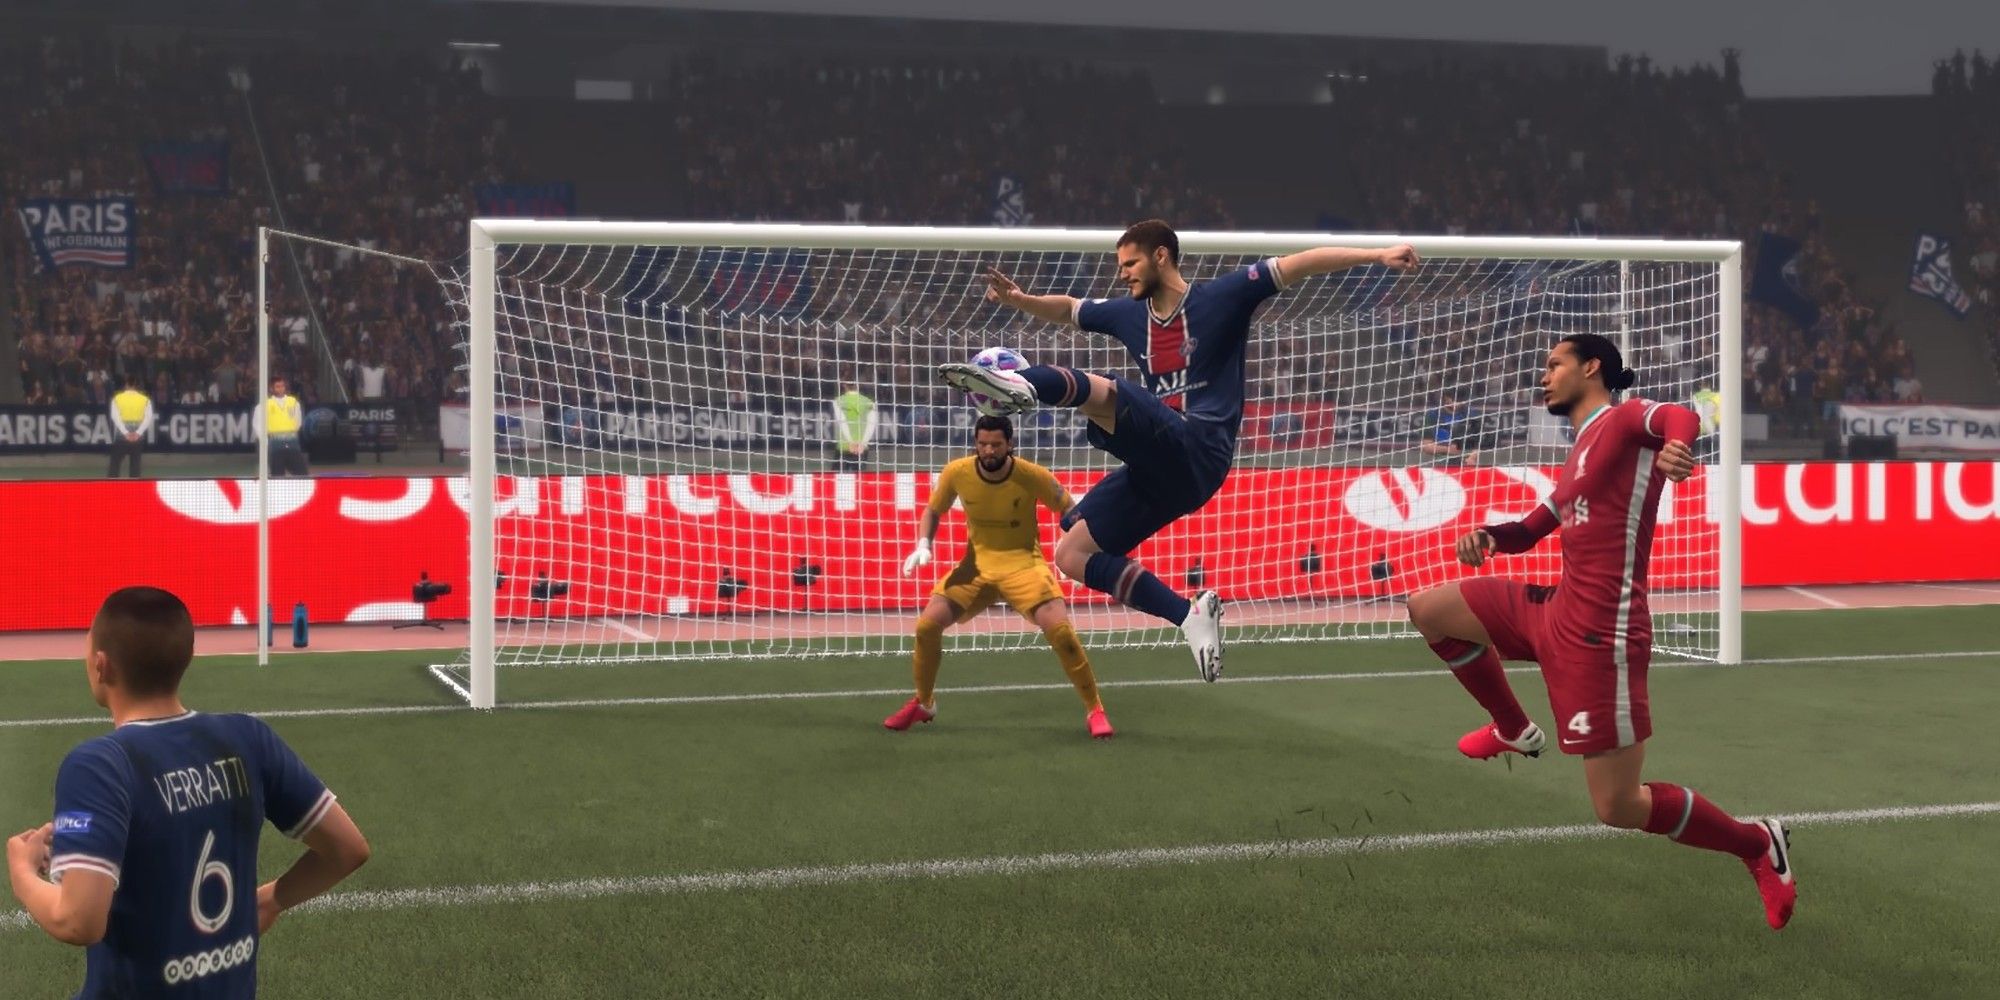 A player scores a goal off a corner kick in FIFA 21